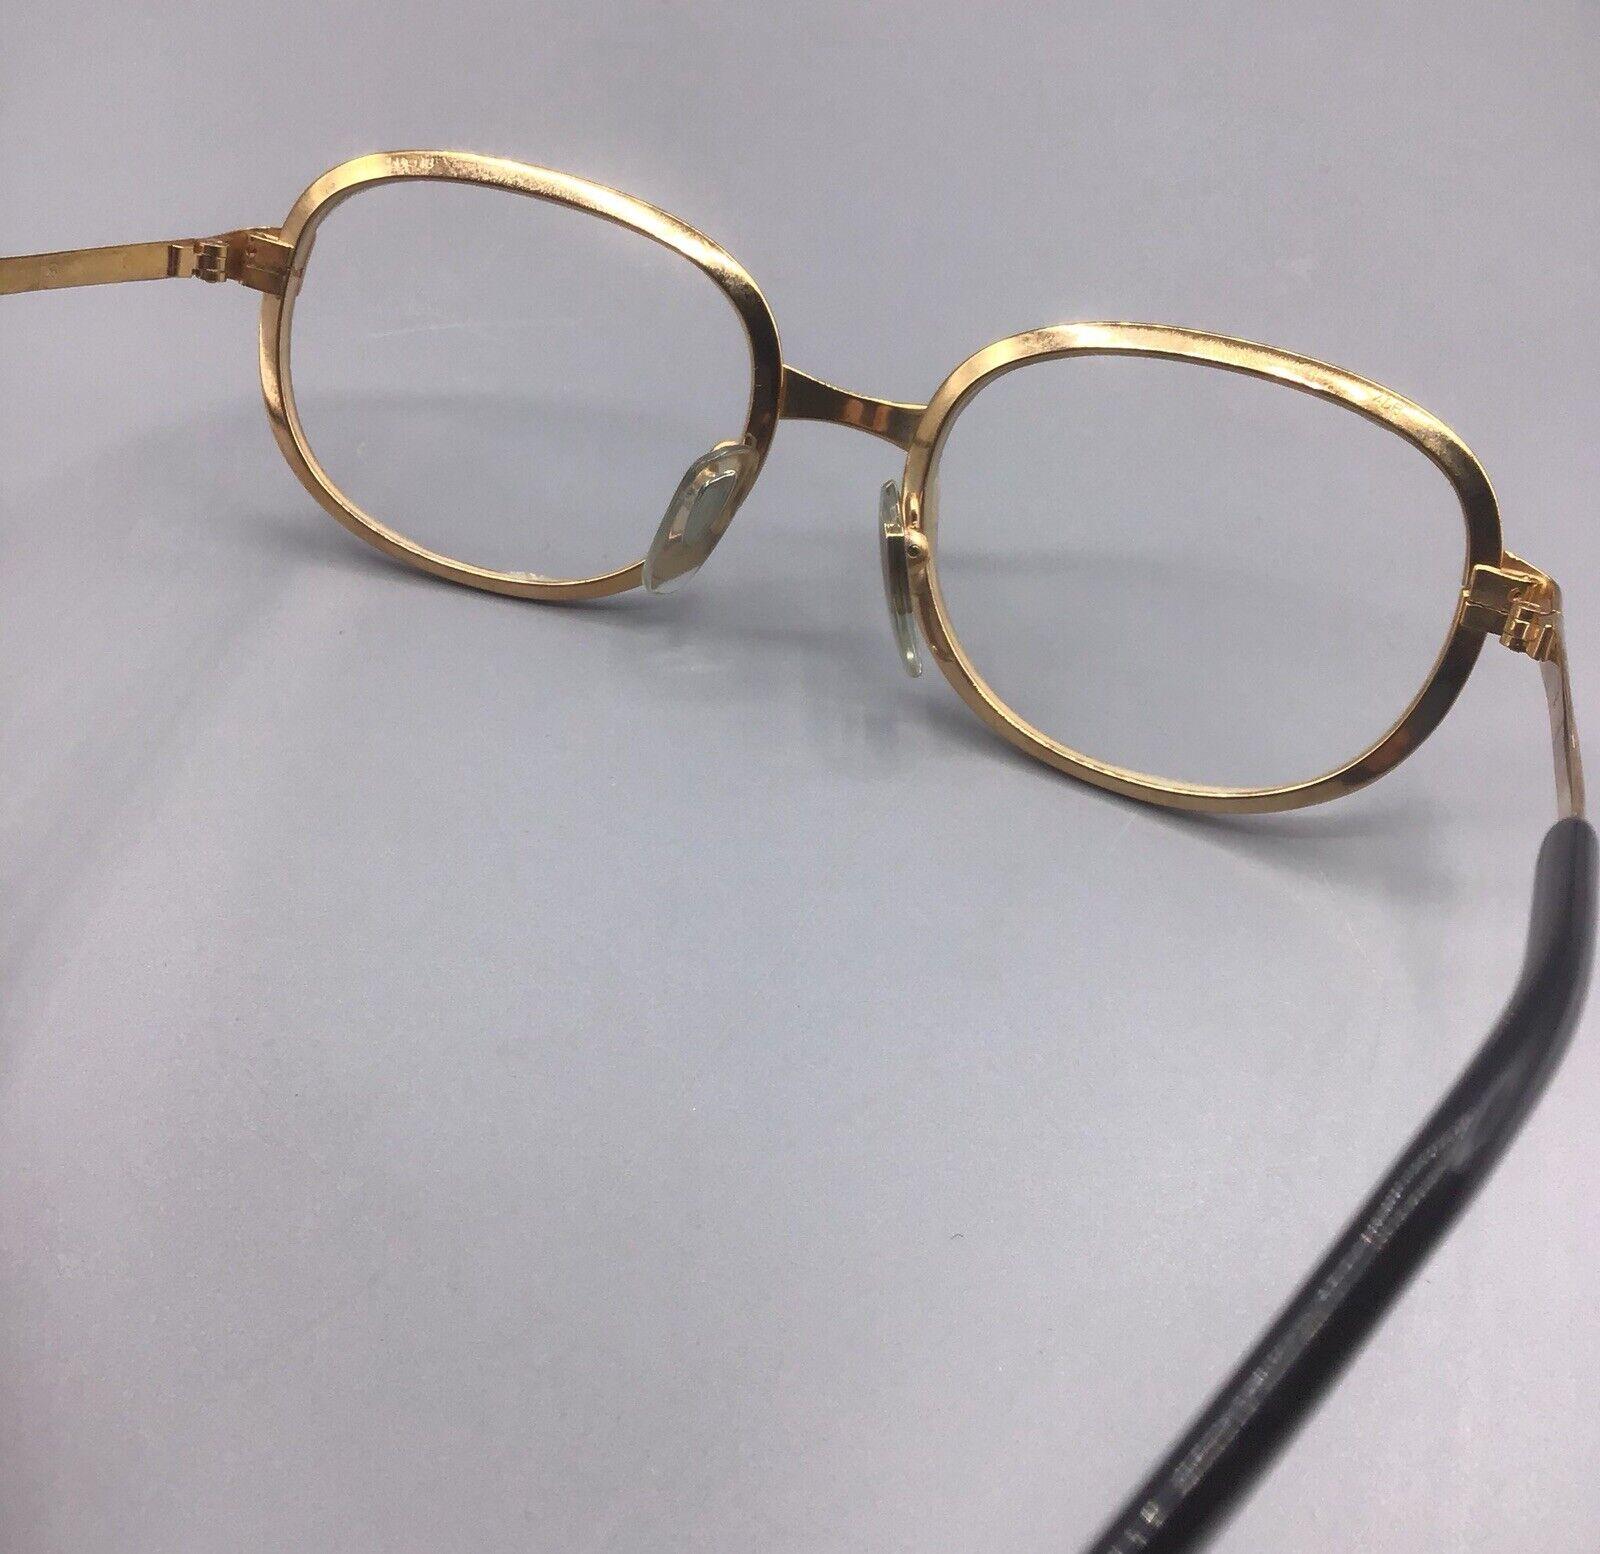 Metzler eyeglasses frame gold laminated vintage occhiale brillen